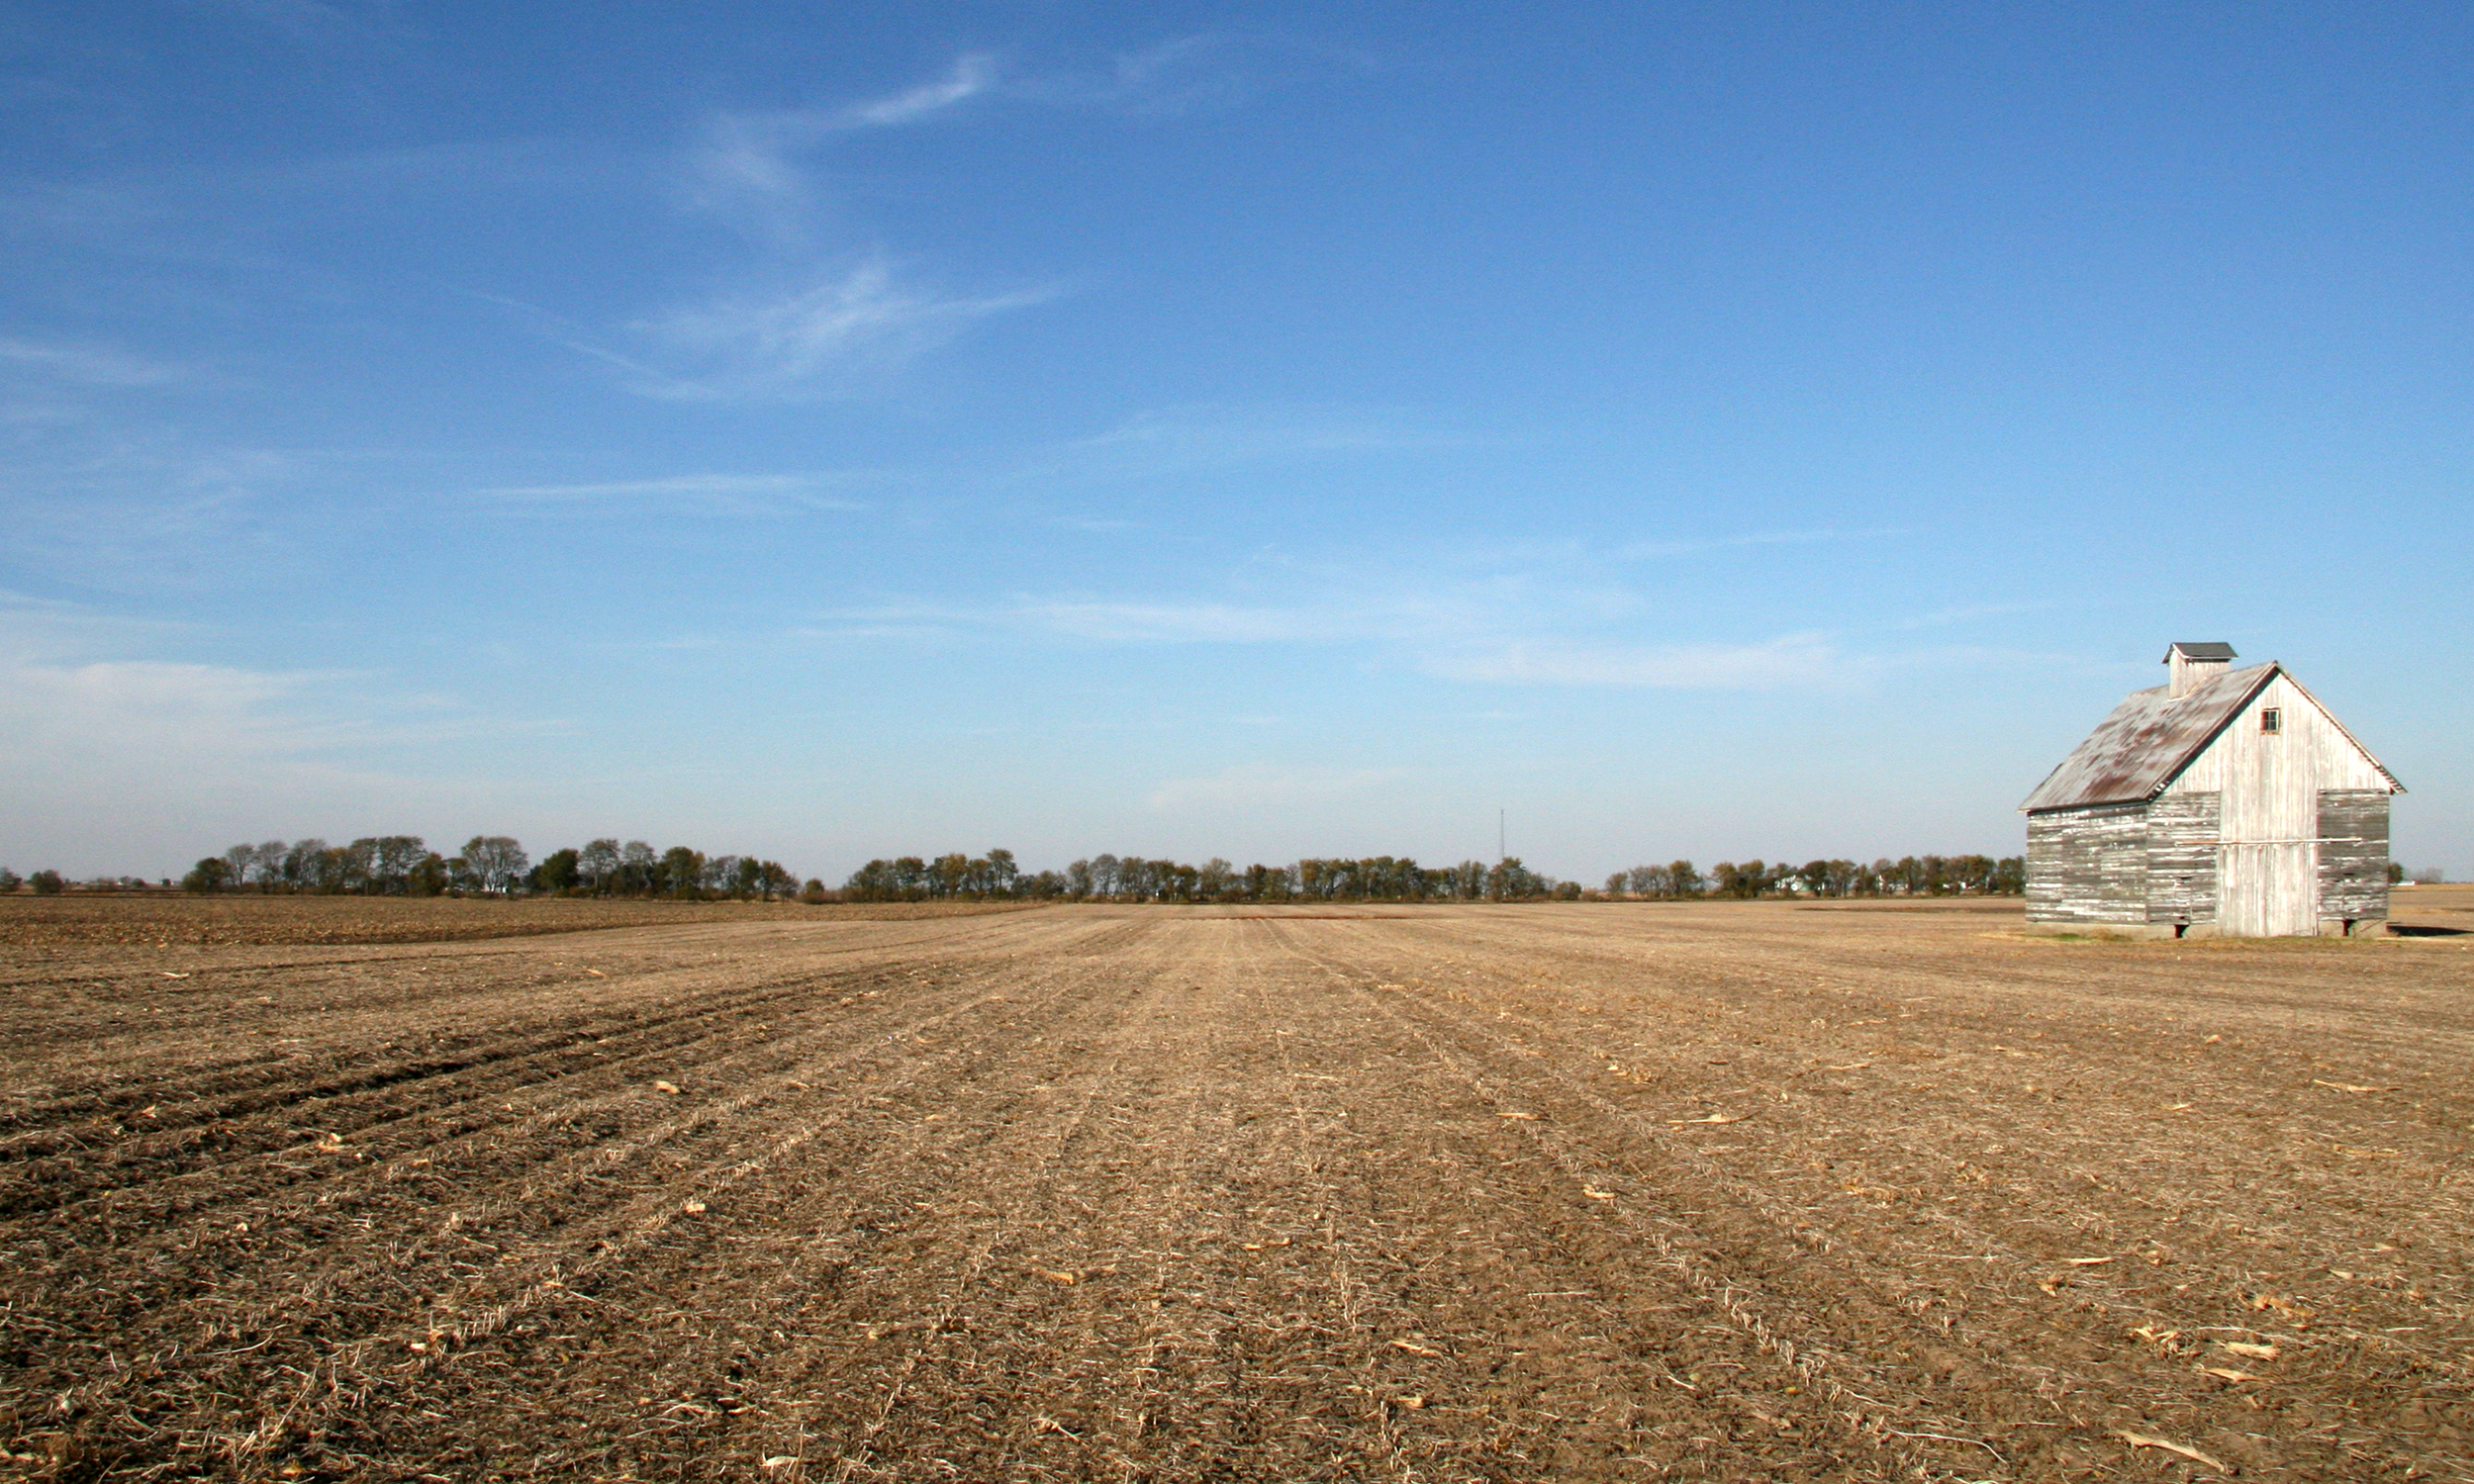 File:Wheat field.png